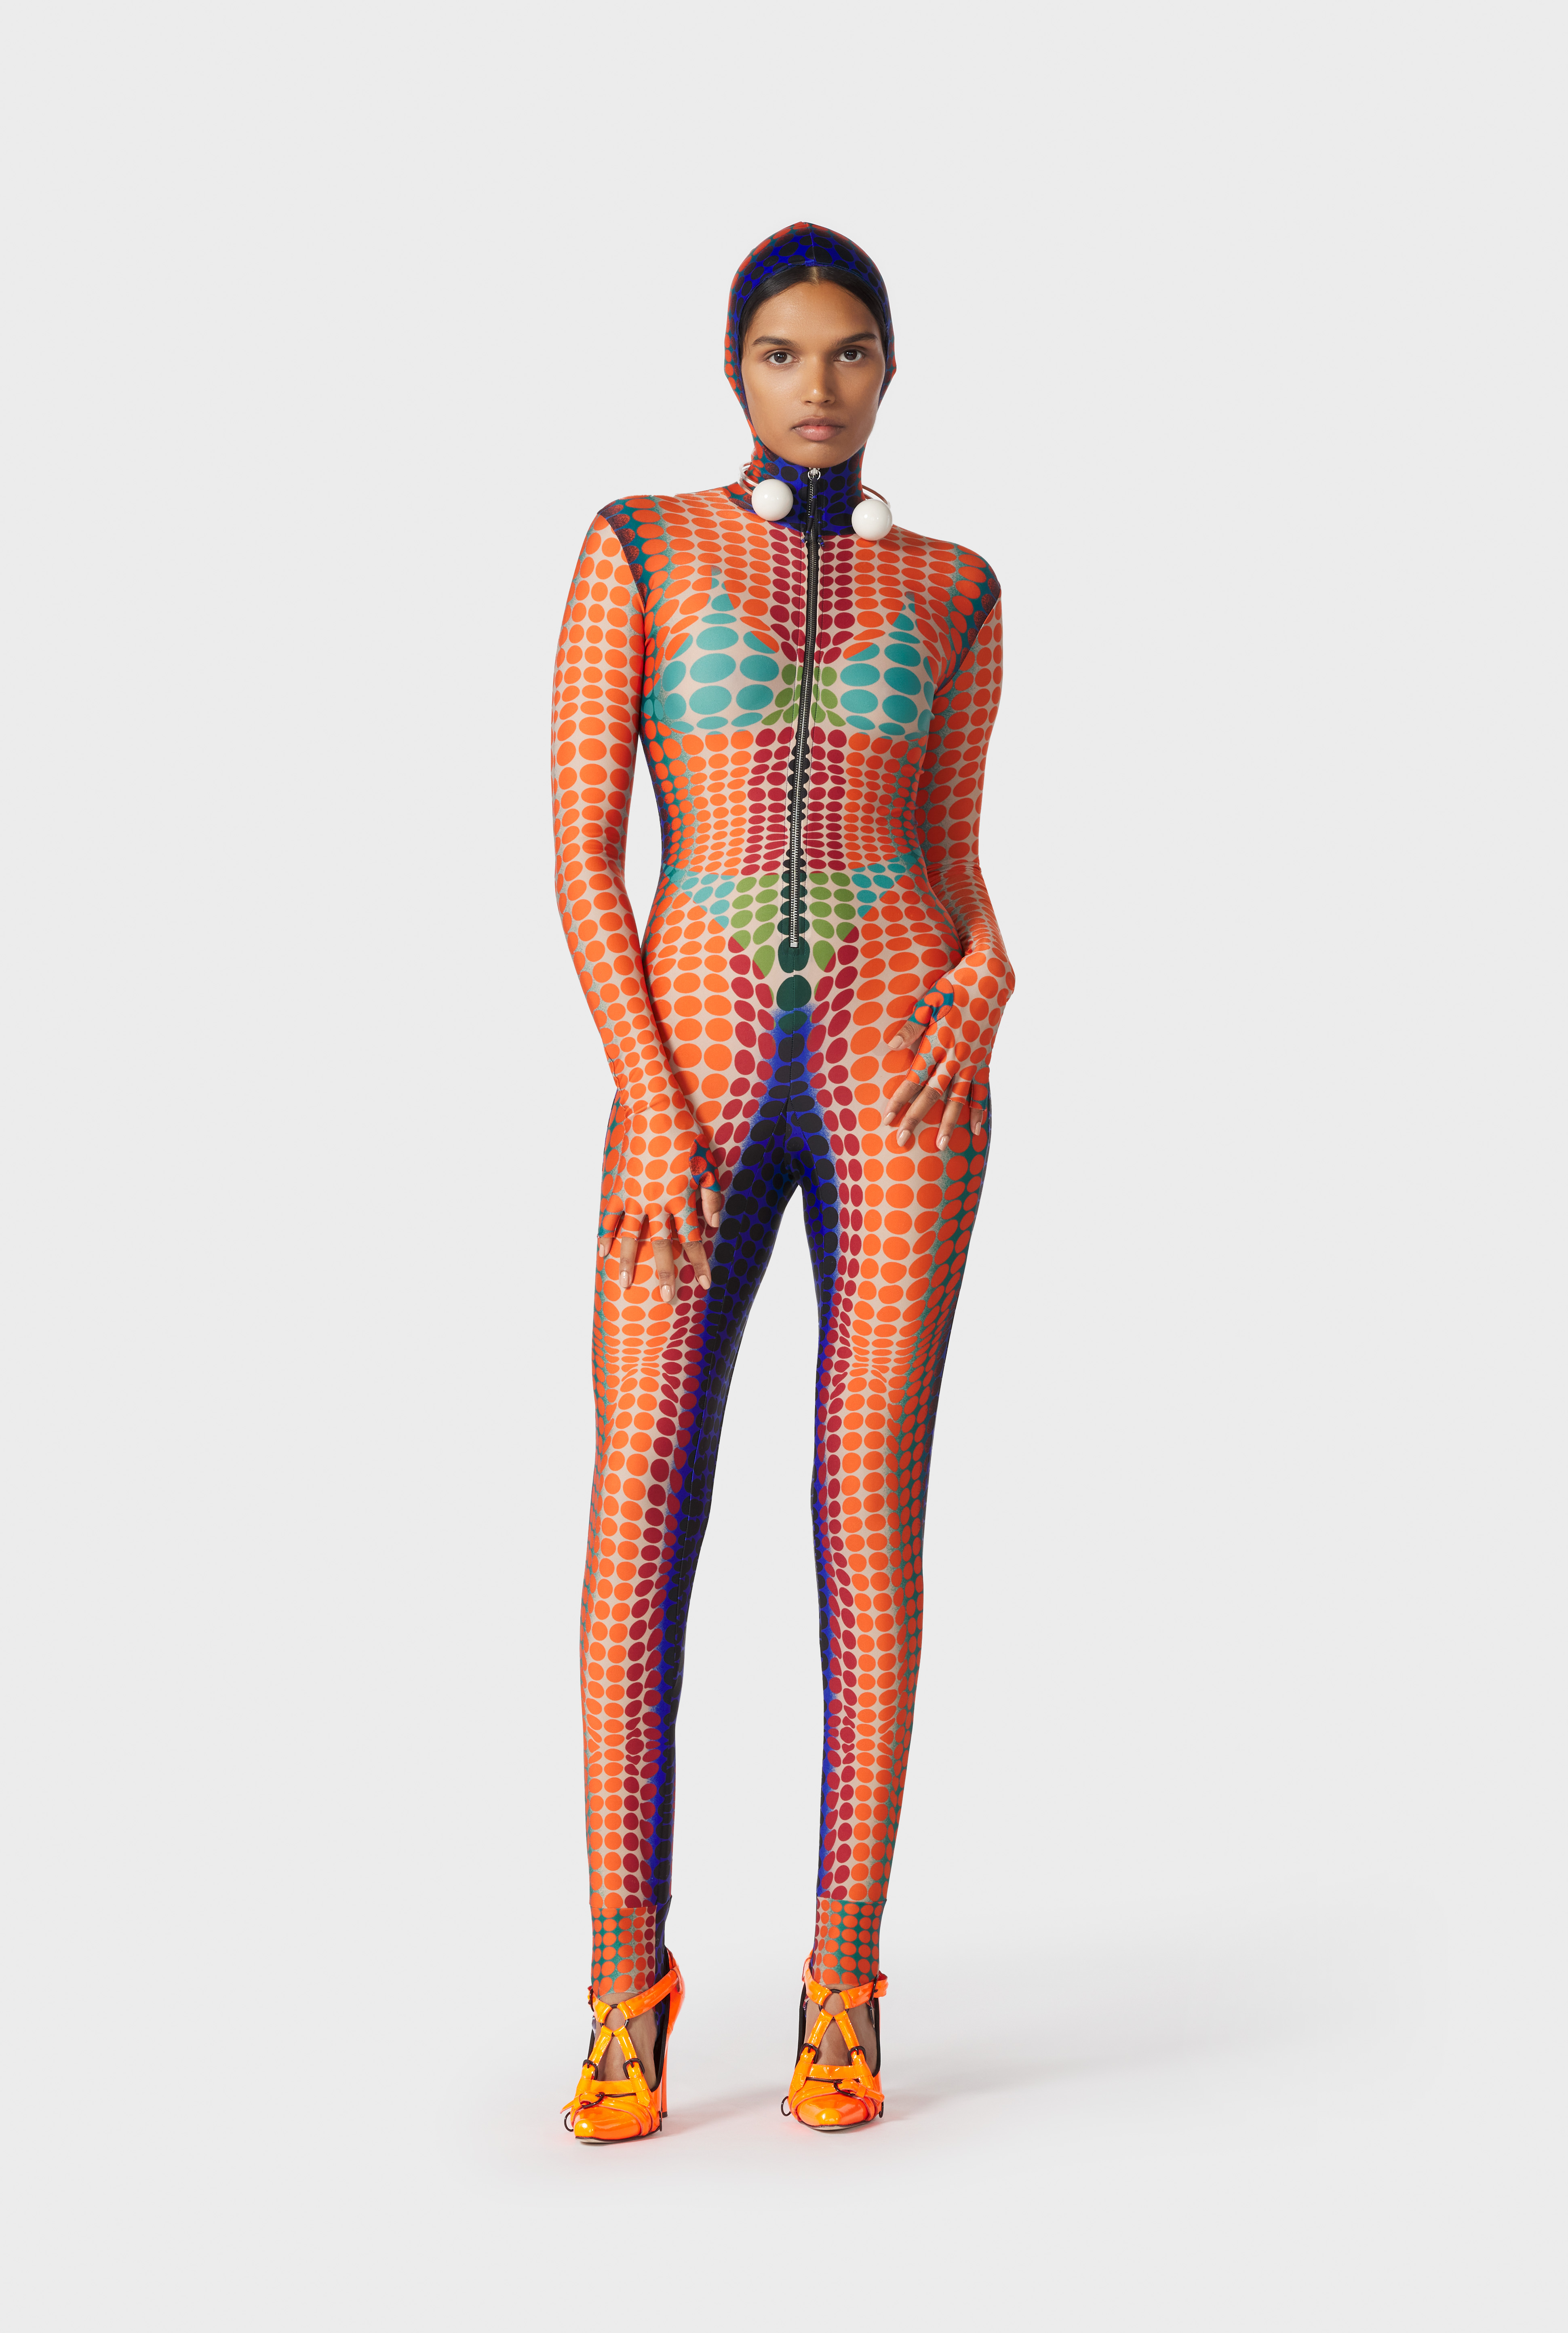 Jean Paul Gaultier's Perfectly Postmodern Fashion Show